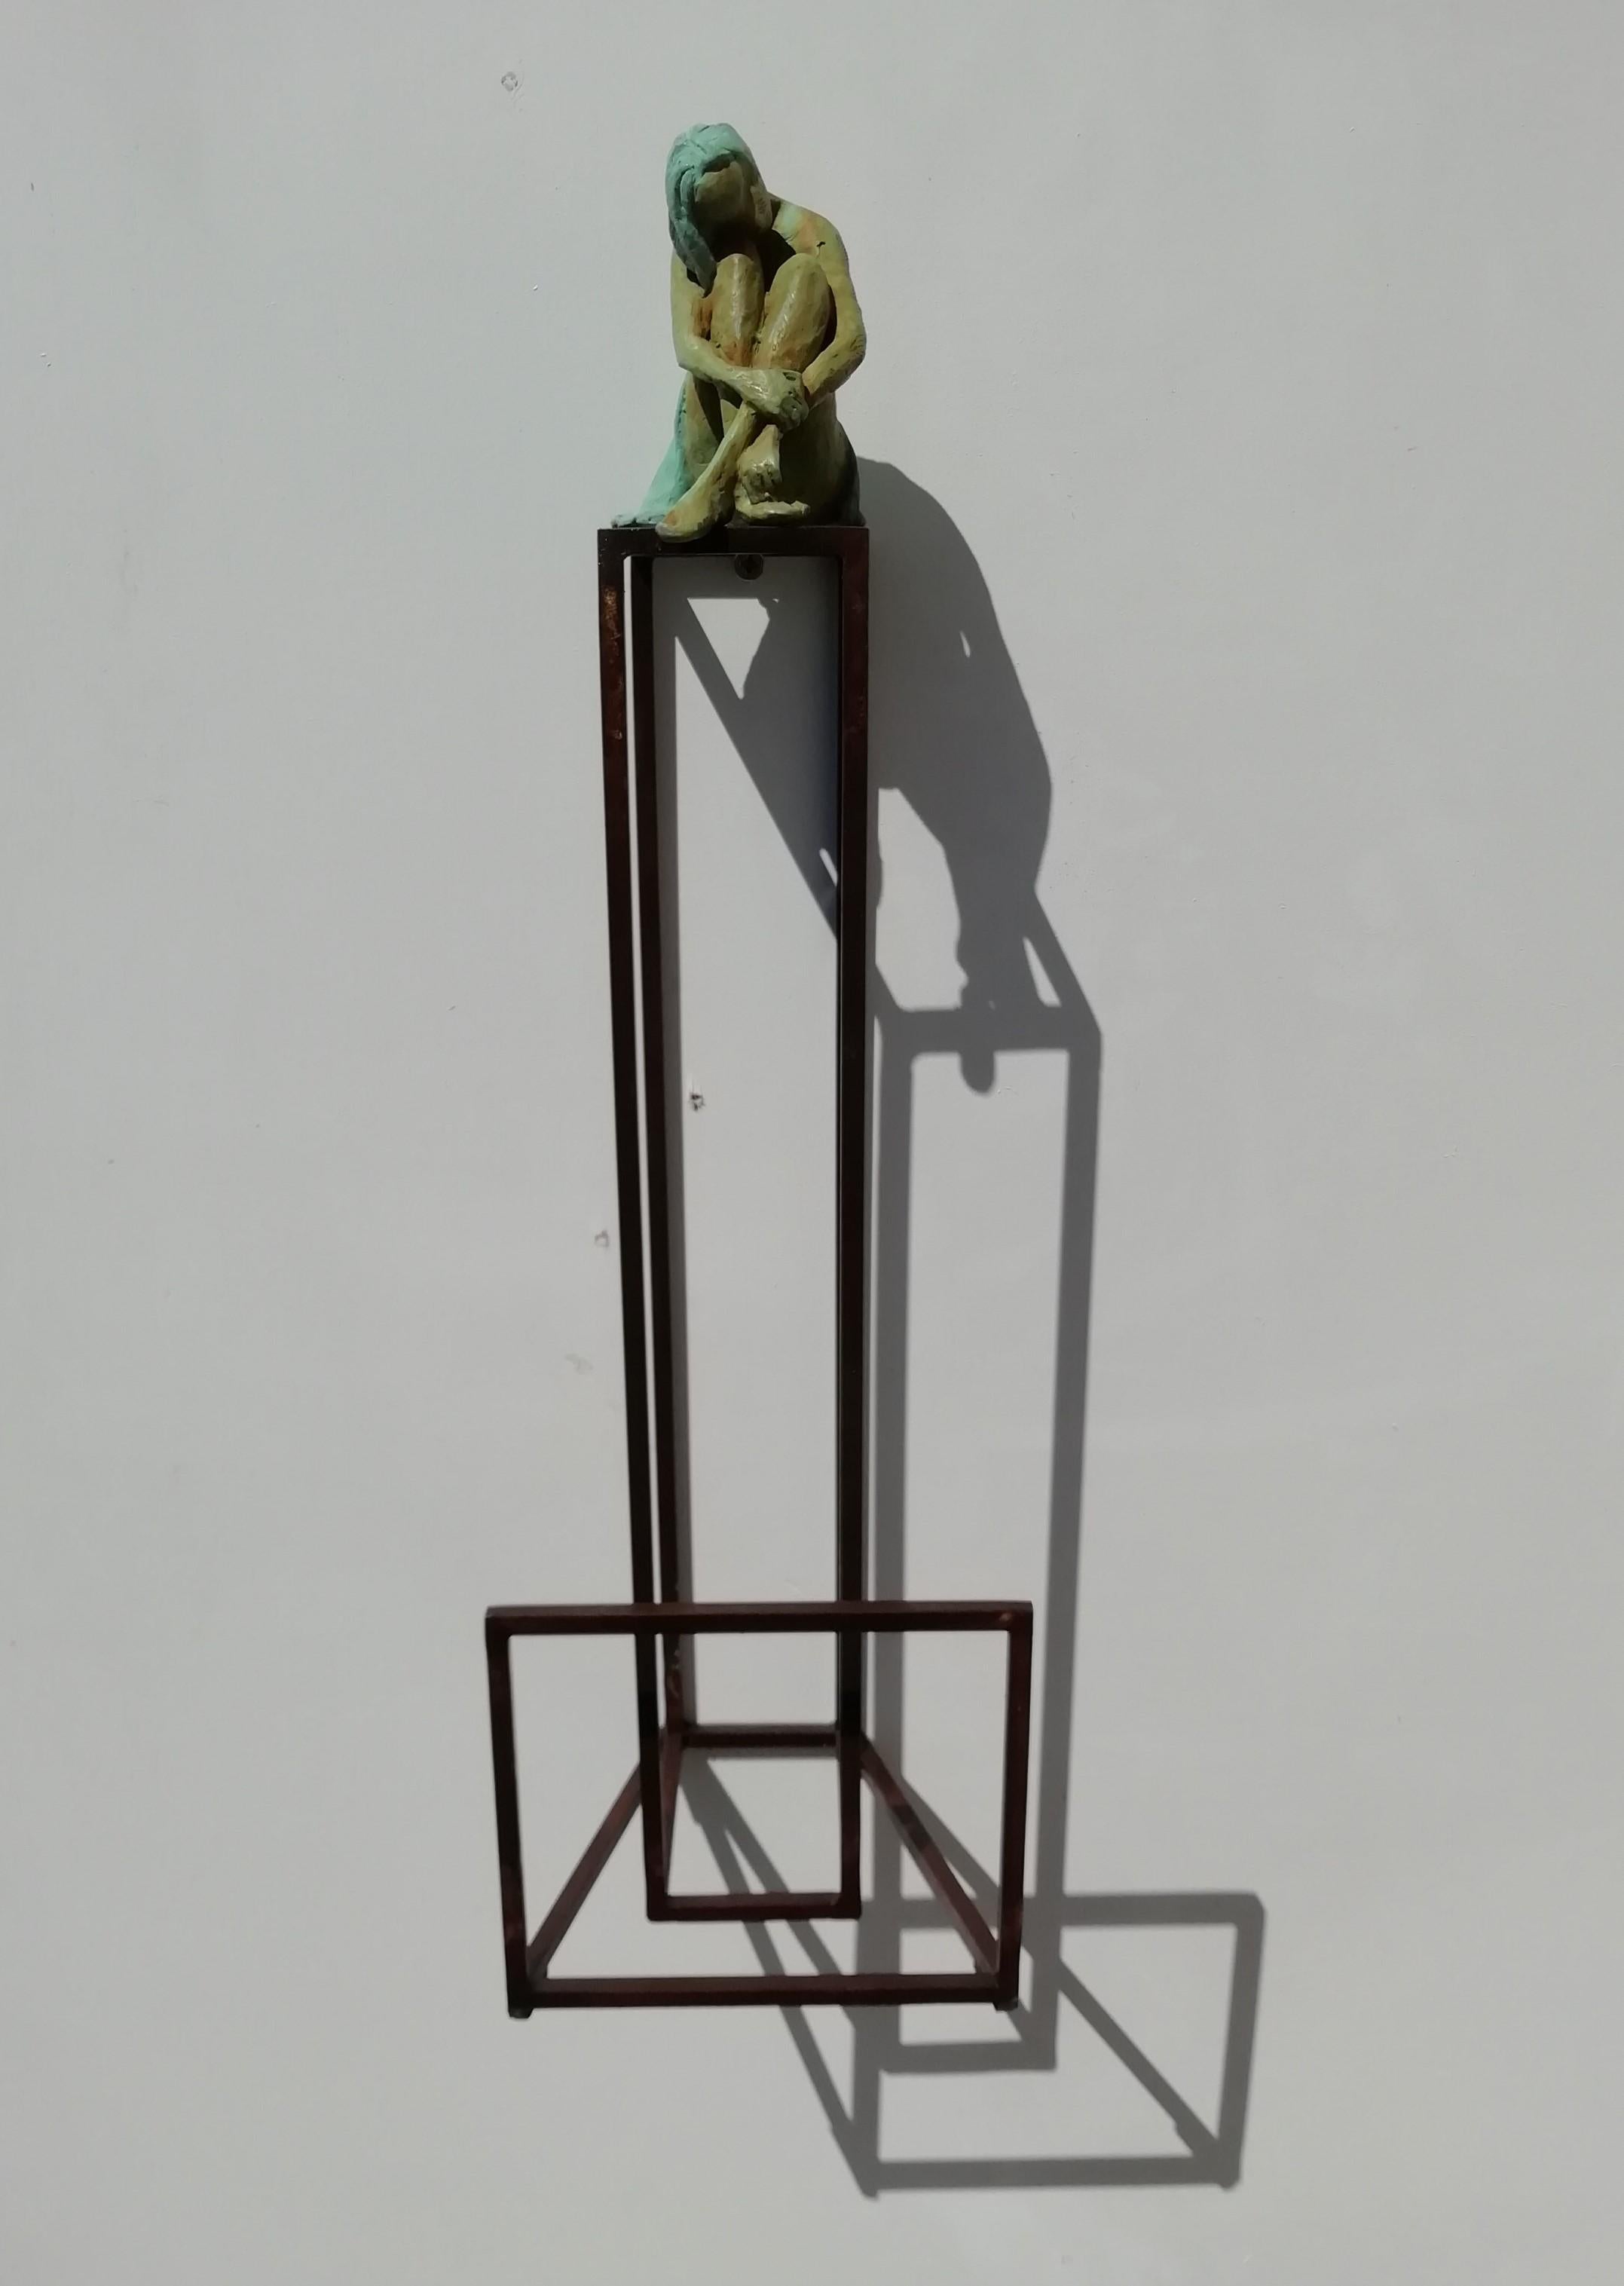 Joan Artigas Planas Figurative Sculpture - "Dreamy" contemporary bronze table mural sculpture figurative girl freedom dream